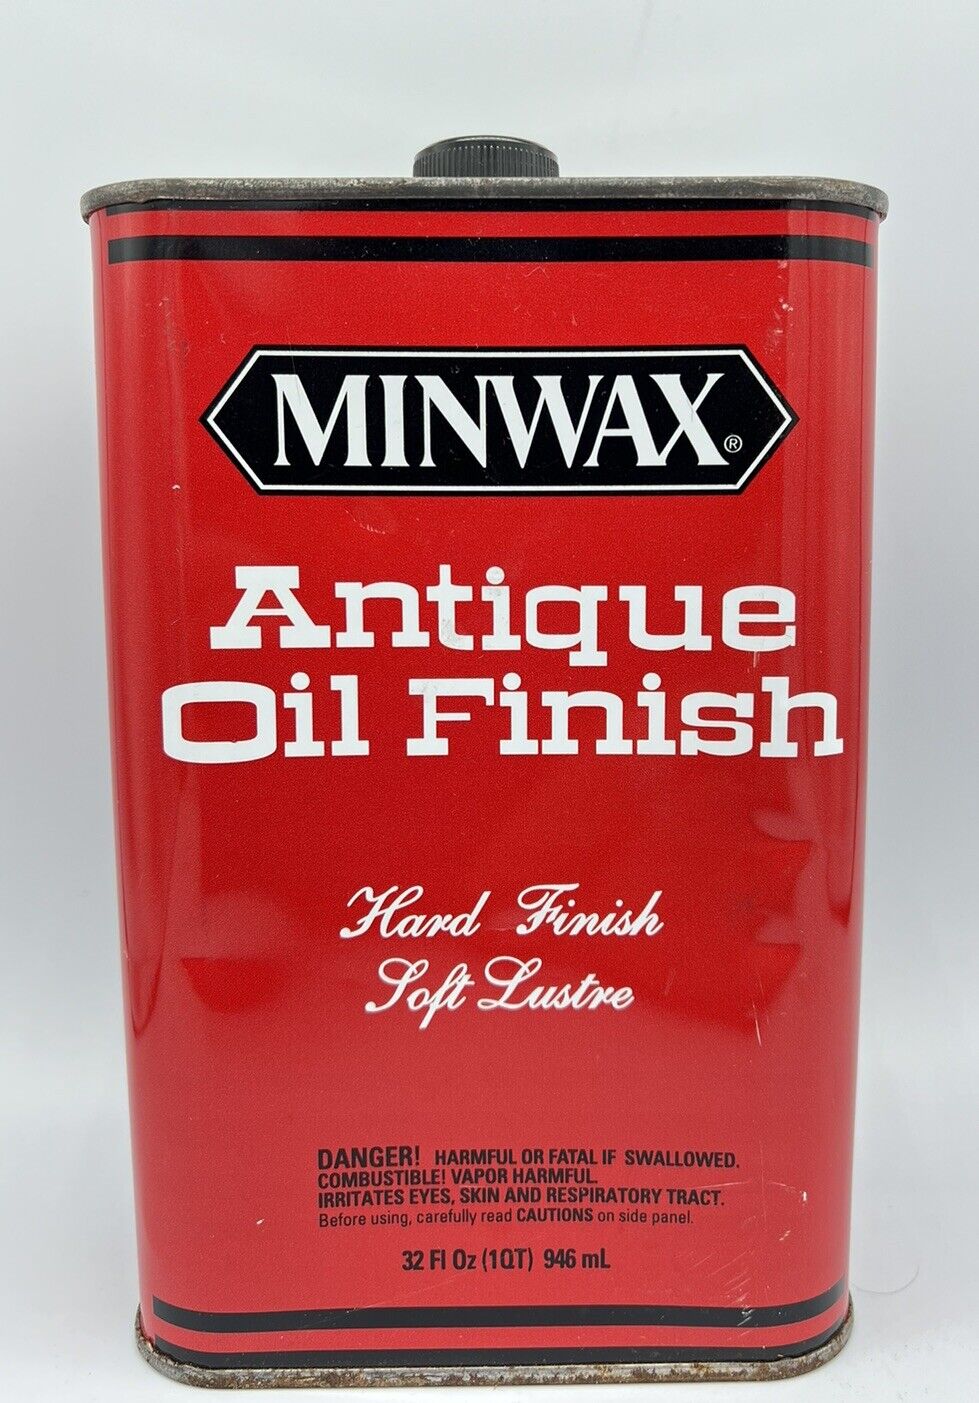 Minwax 67000 Antique Oil Finish QUART 32 oz Hard Finish Soft Lustre DISCONTINUED